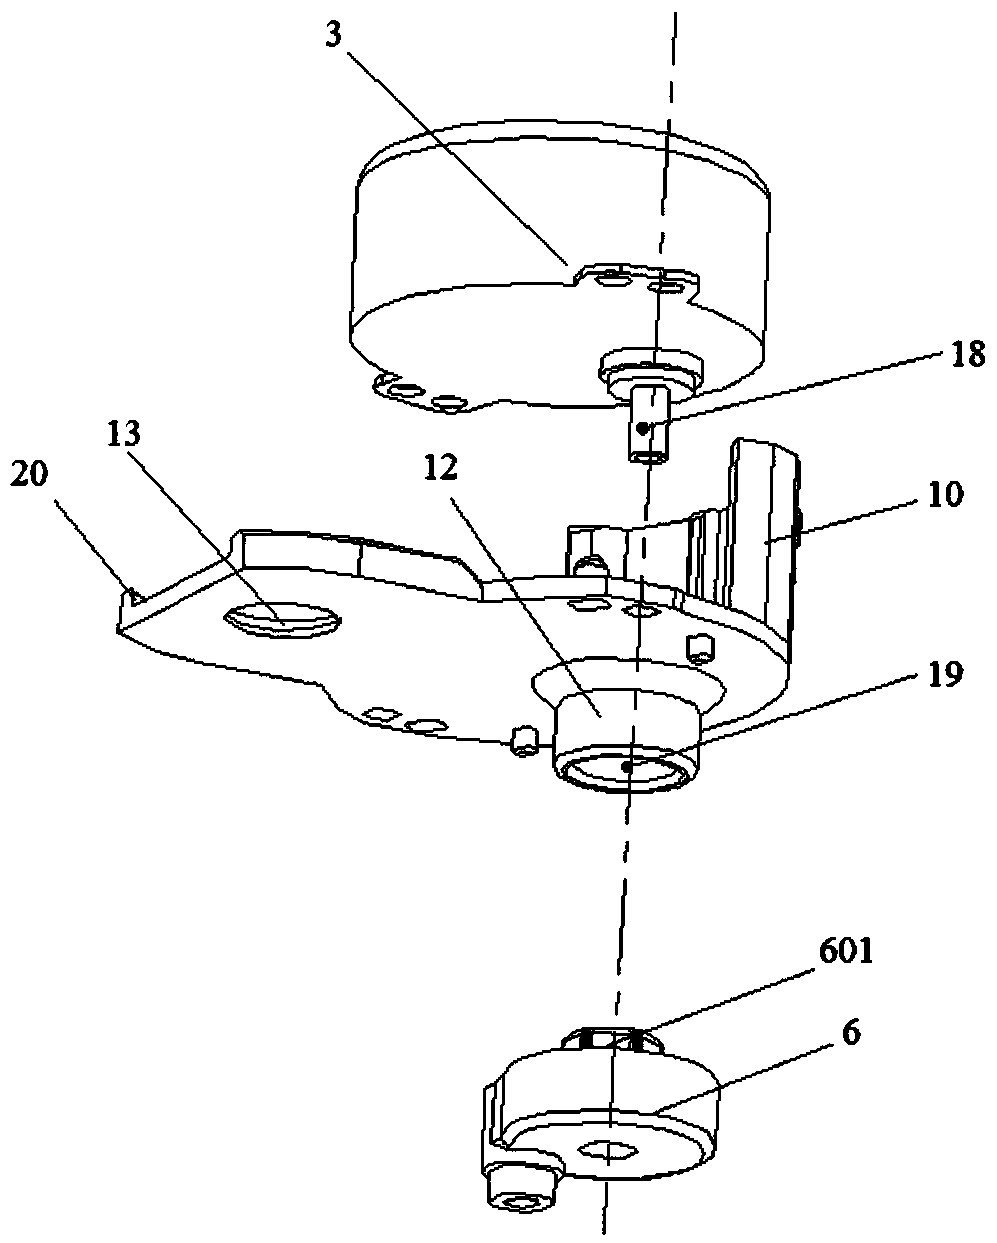 Motor driving assembly, fan oscillating mechanism and fan